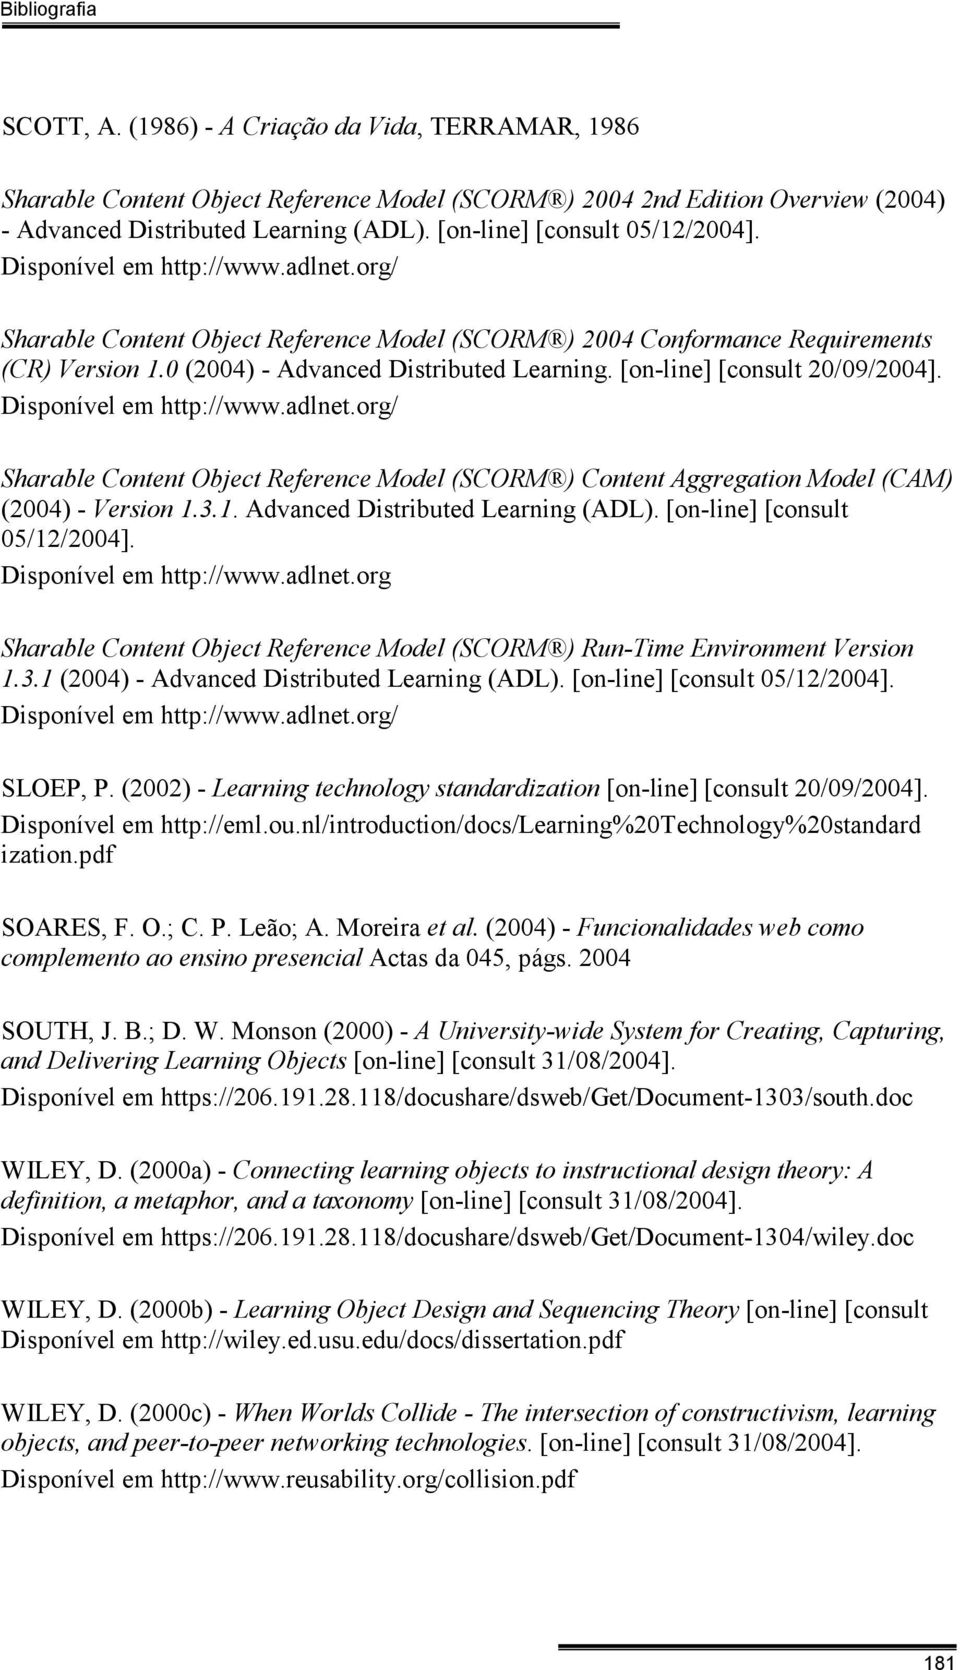 0 (2004) - Advanced Distributed Learning. [on-line] [consult 20/09/2004]. Disponível em http://www.adlnet.